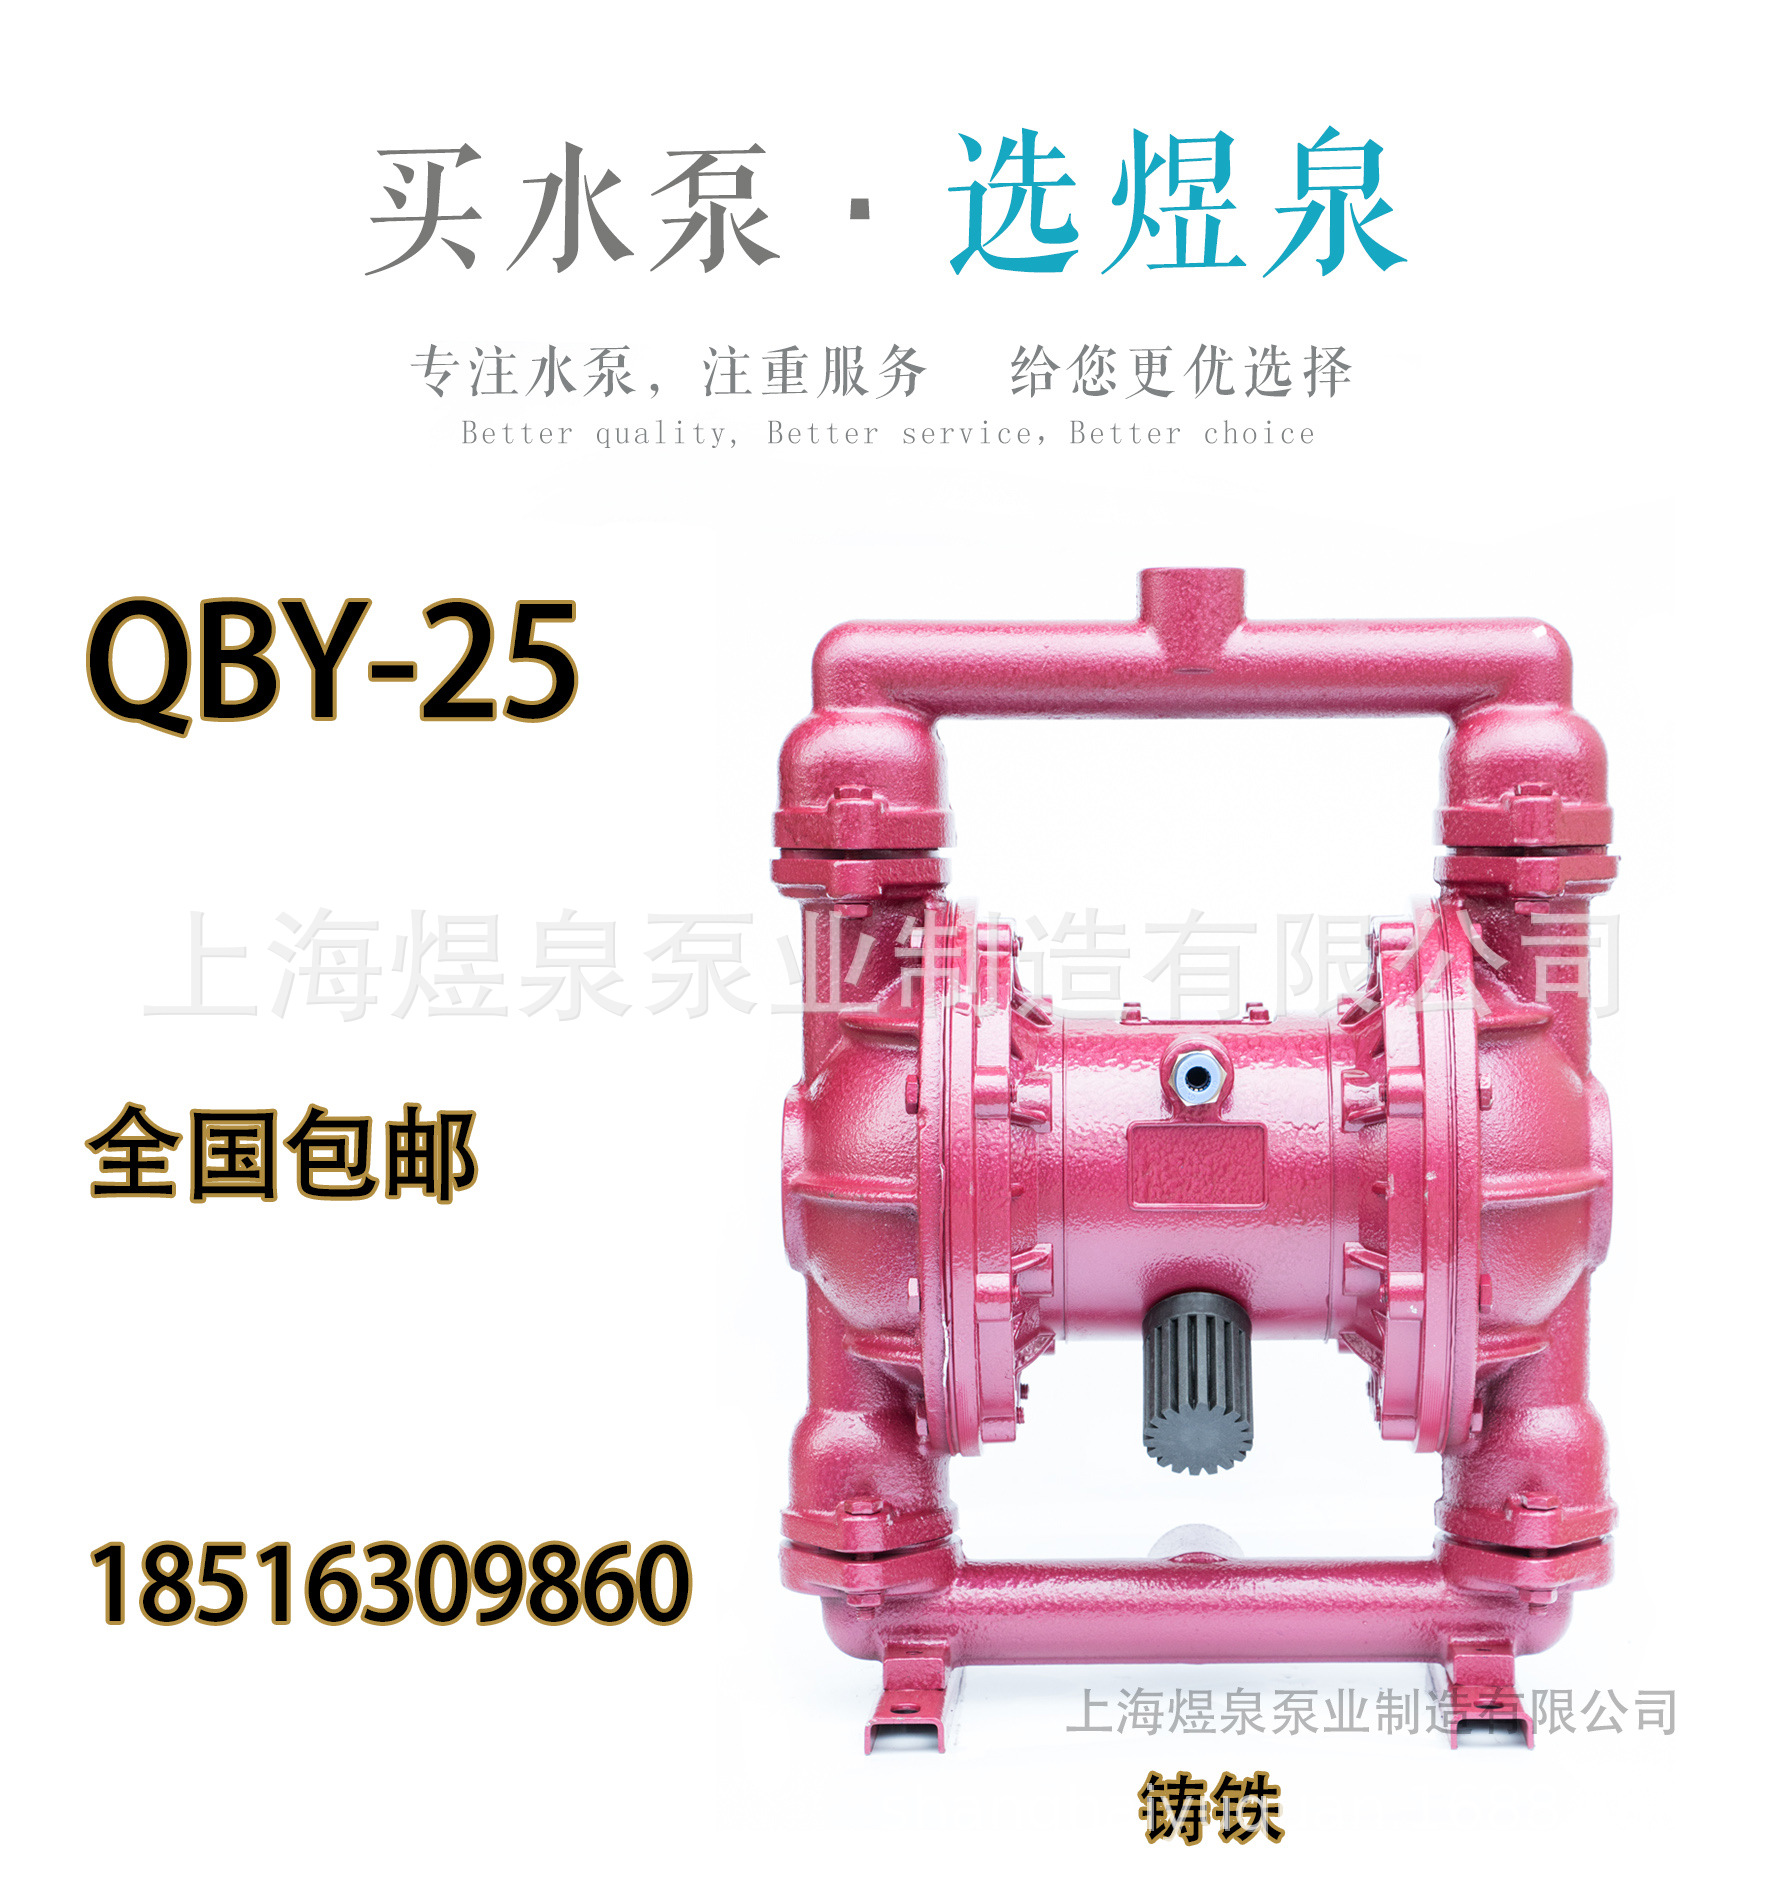 QBY-25 铸铁主页照片.jpg